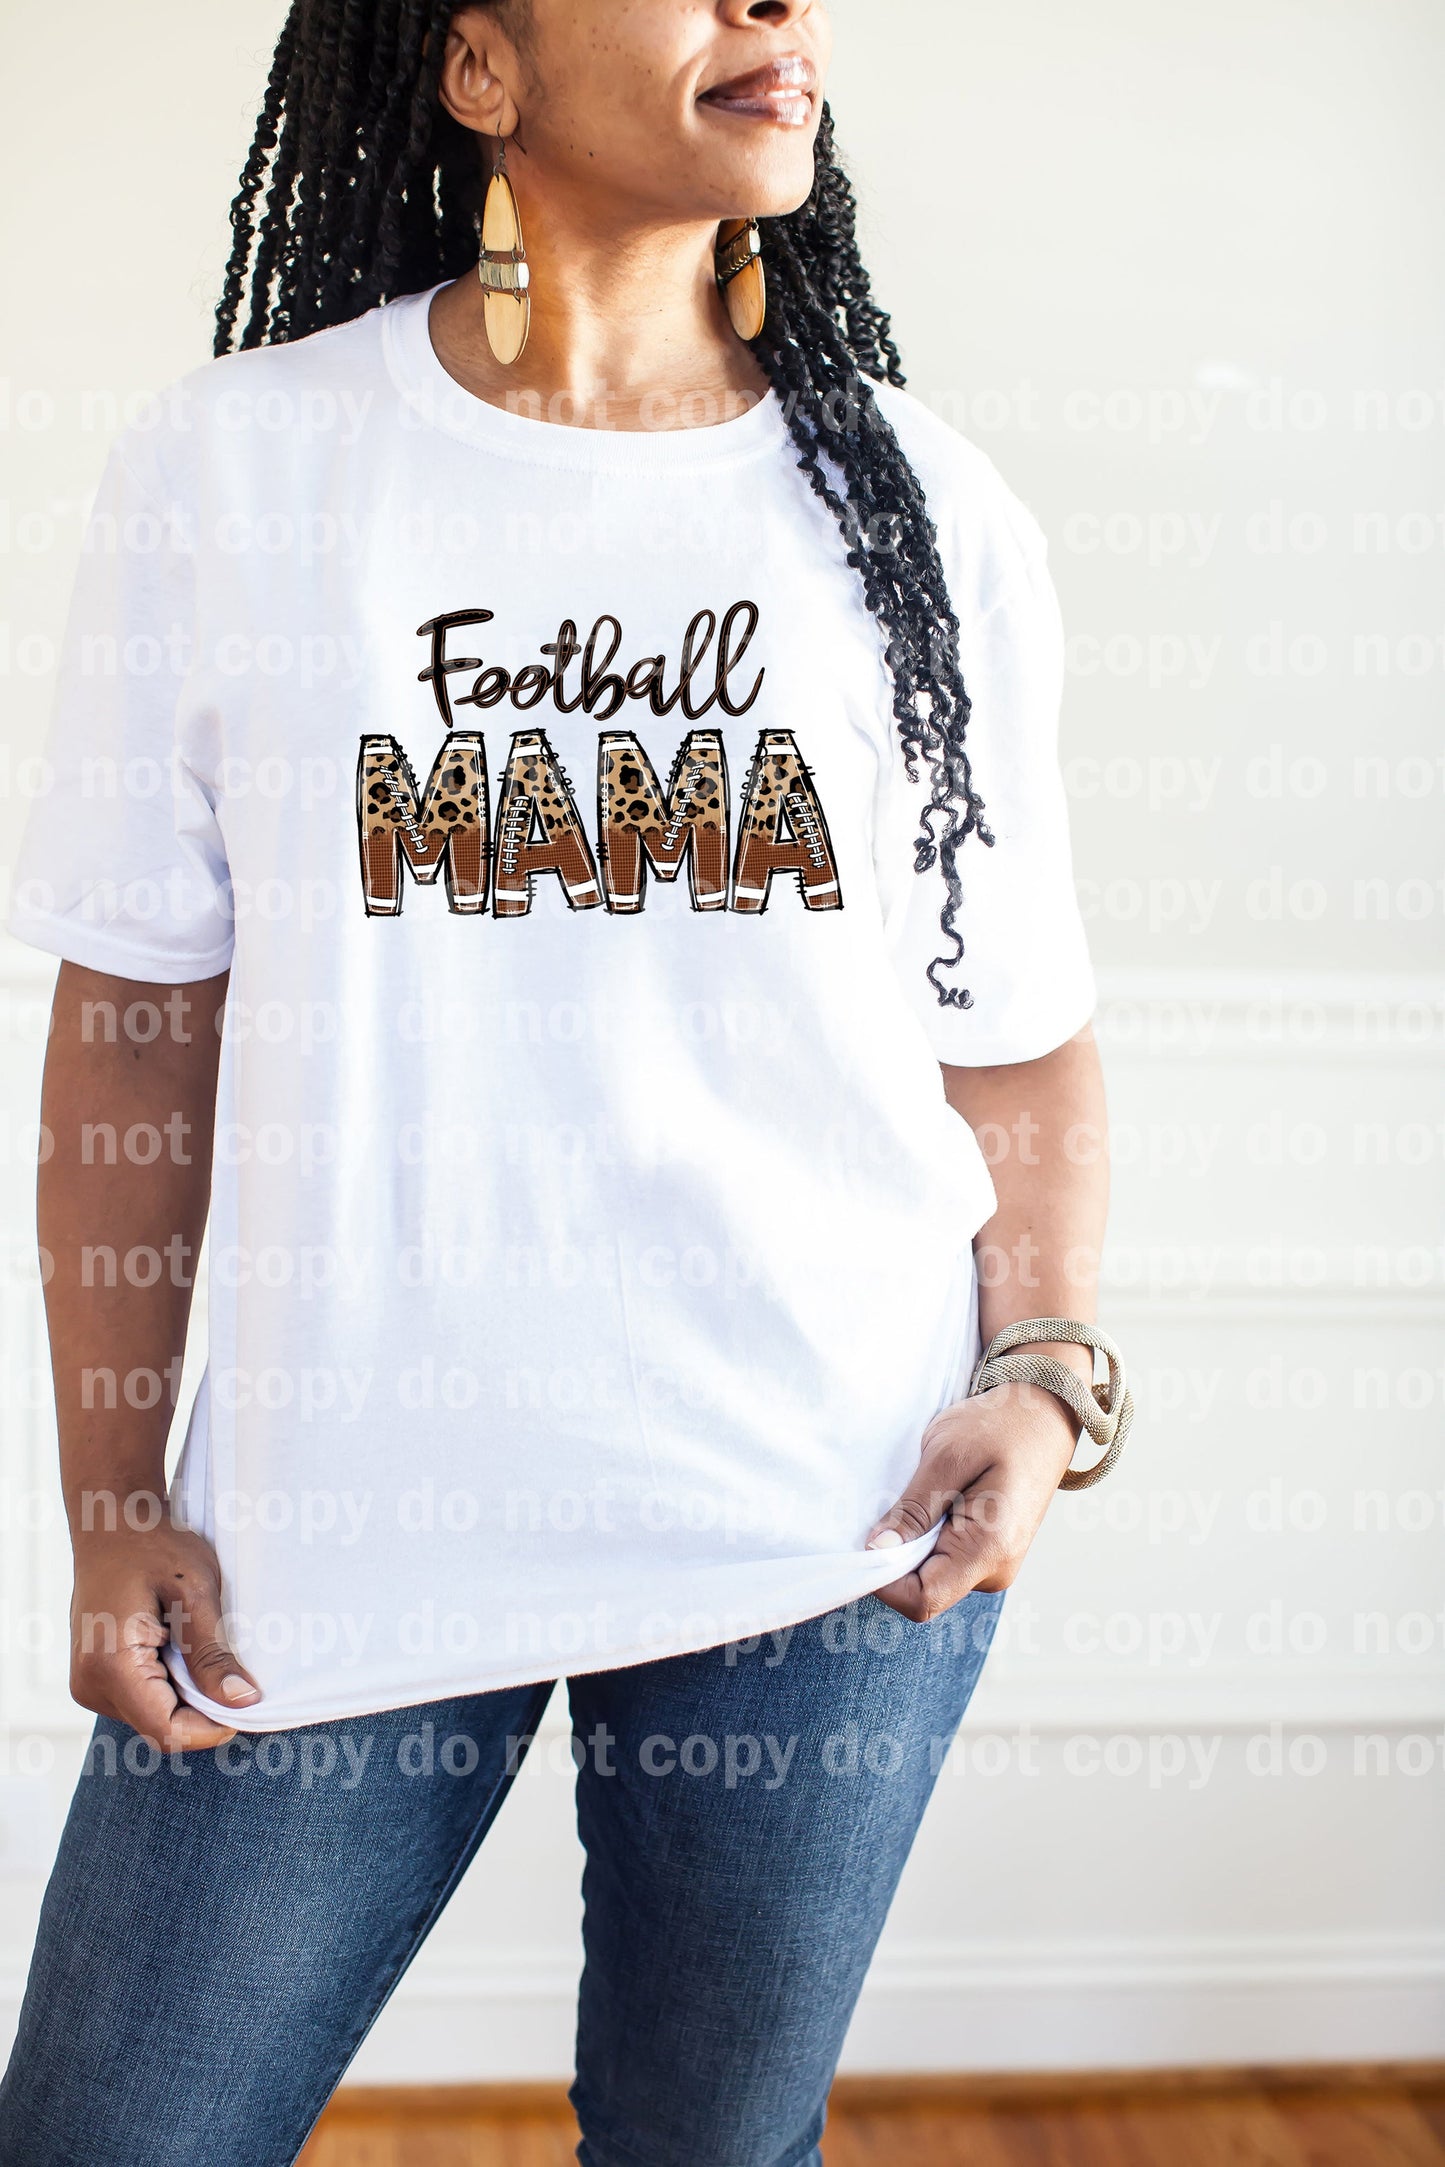 Football Mama Dream Print or Sublimation Print